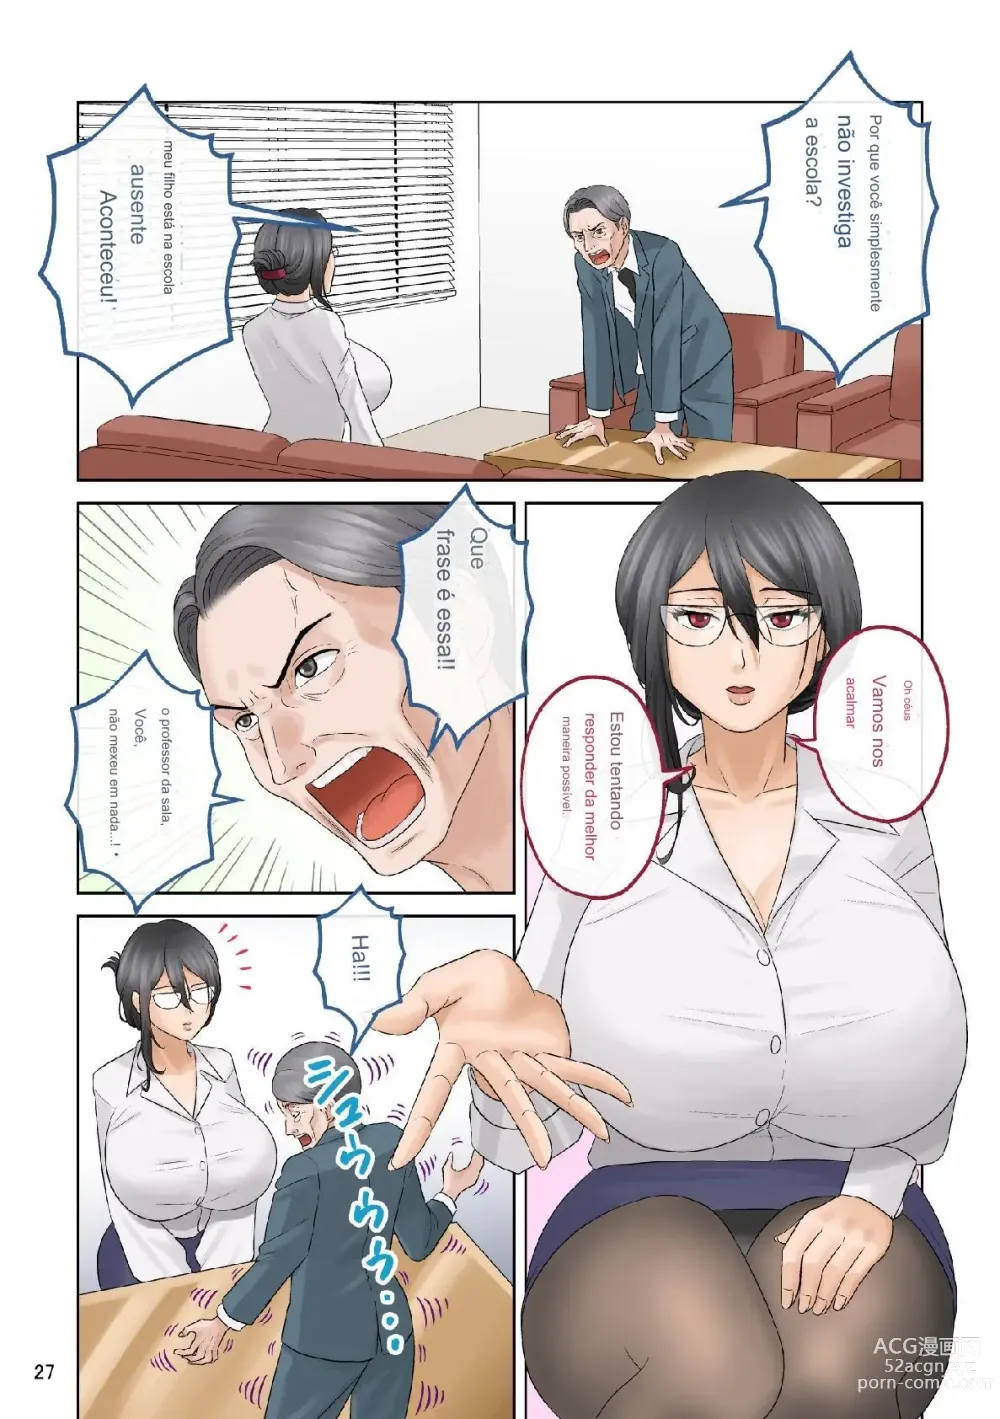 Page 27 of manga TSUBOTARO - SMALL HOMEWORK - Translate PT-BR